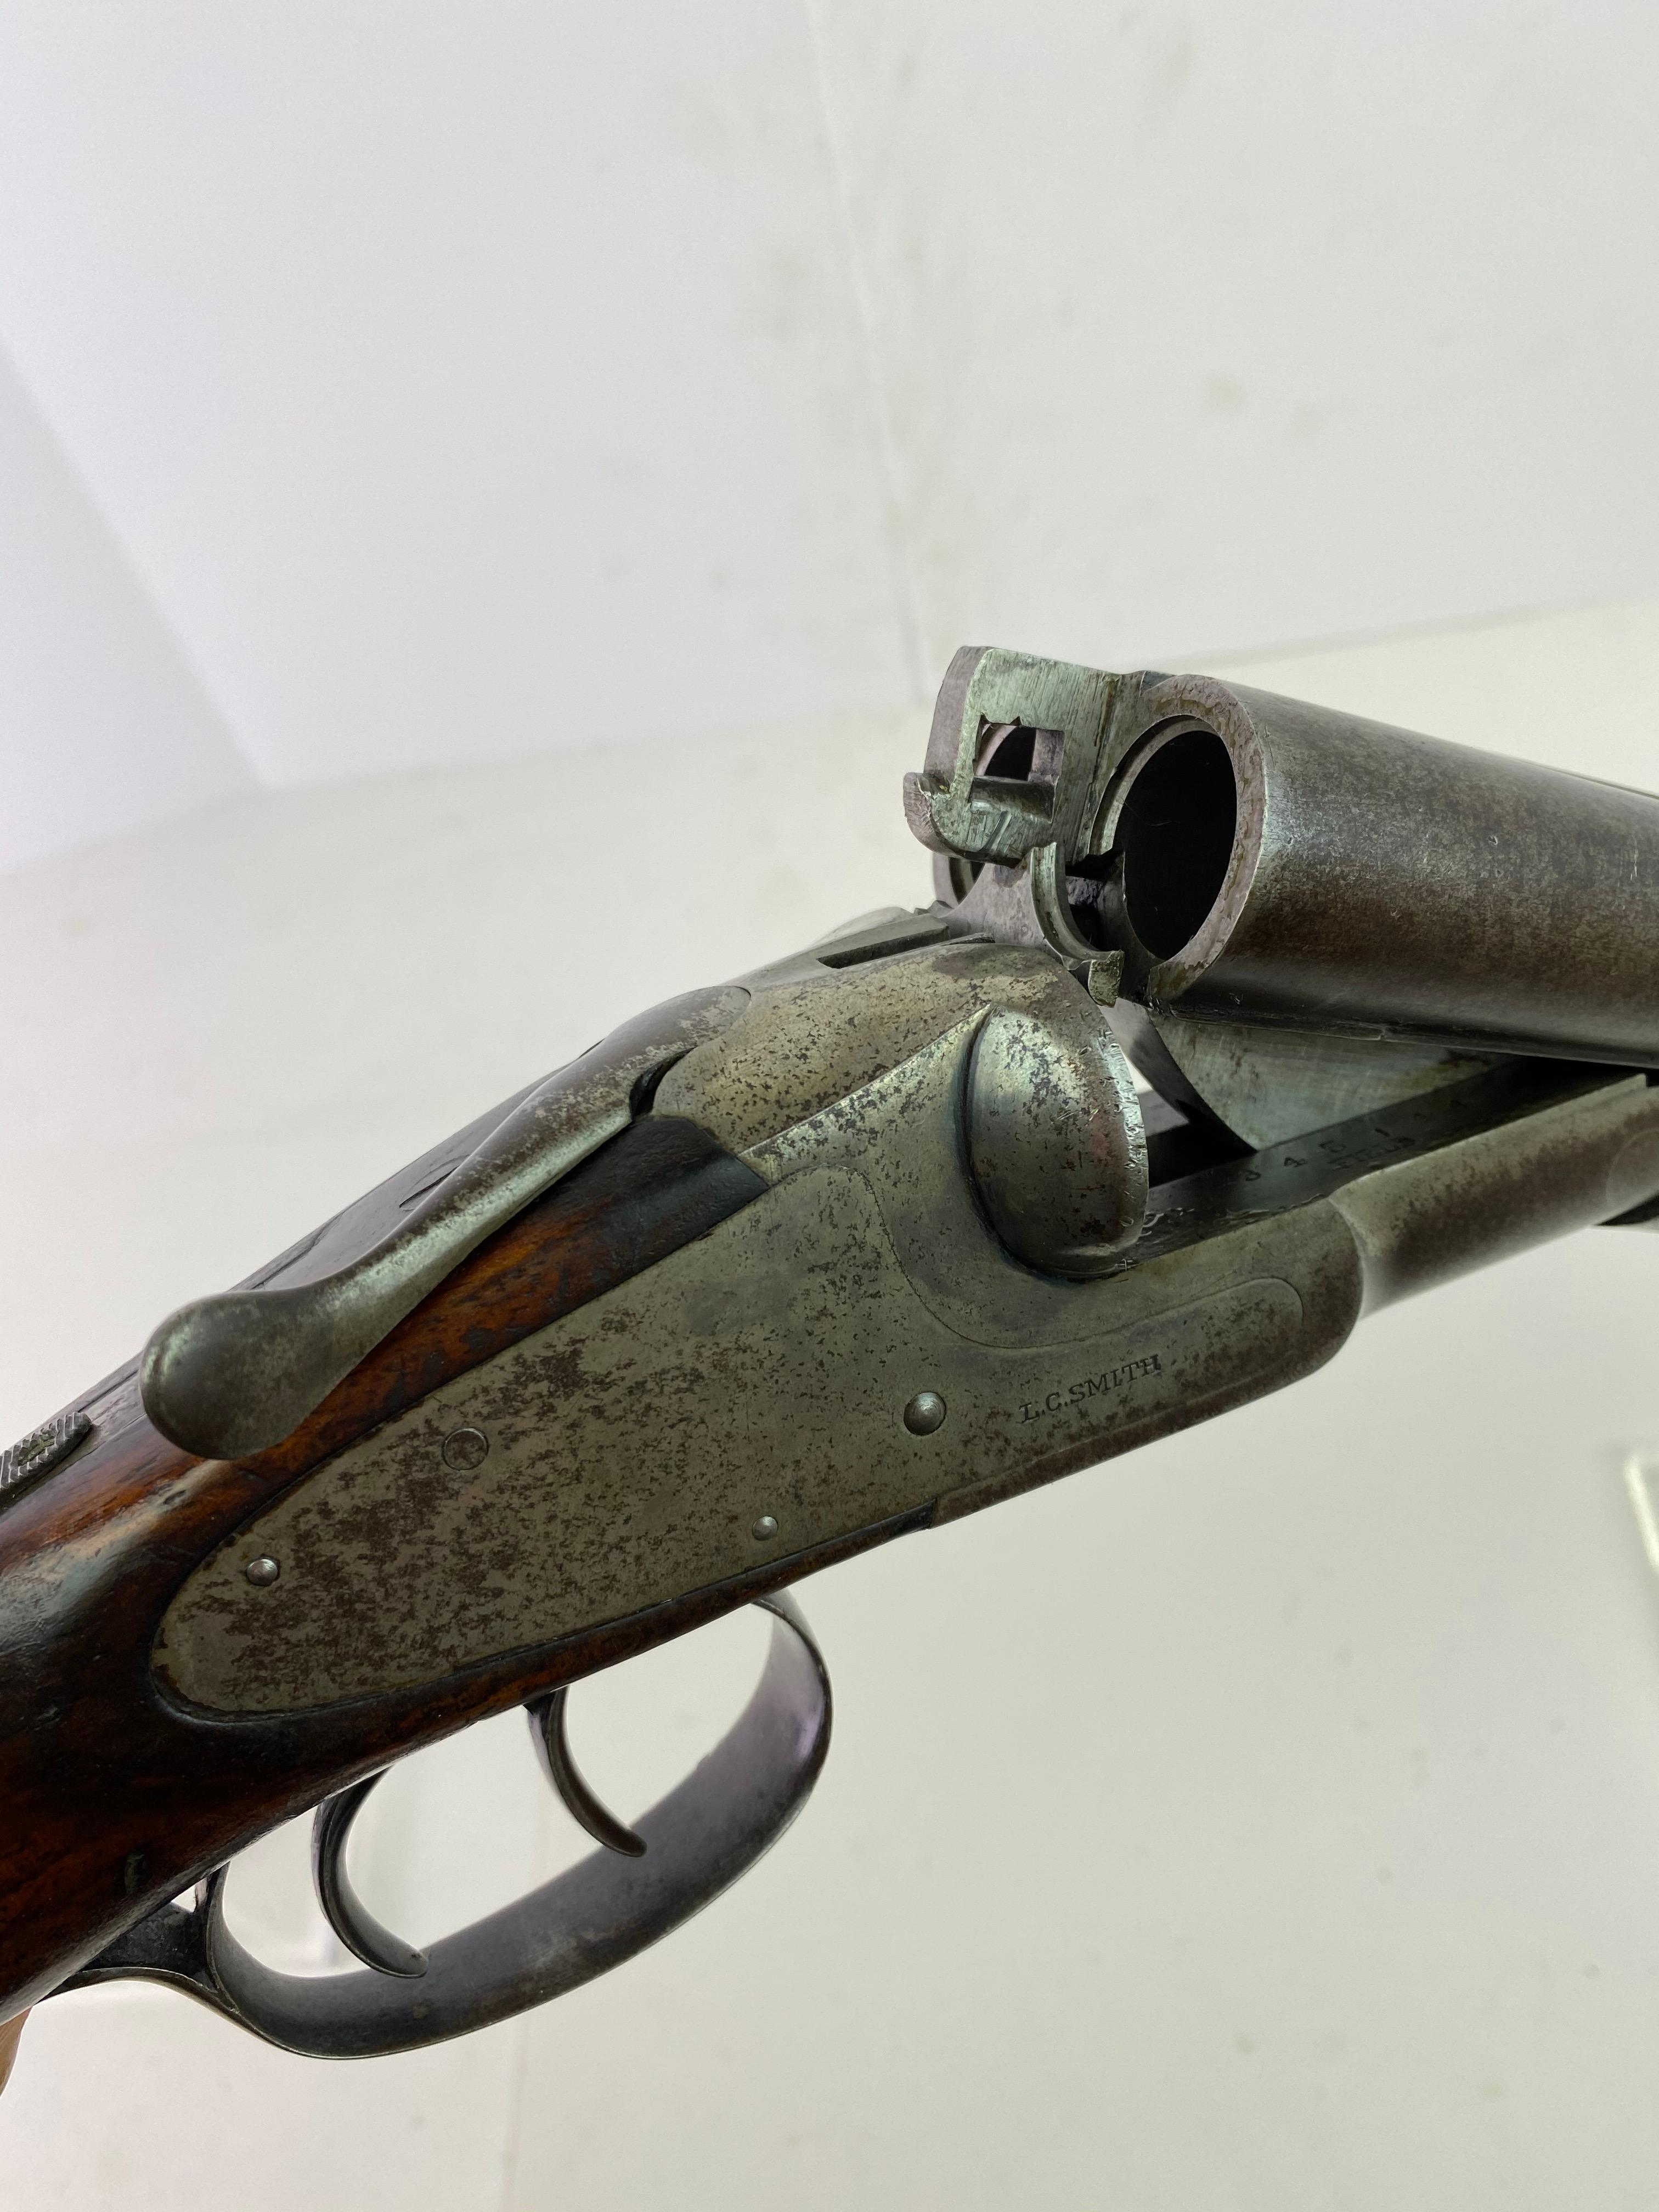 1913 L.C. Smith Field Grade 12 GA. SXS Double Barrel Hammerless Shotgun